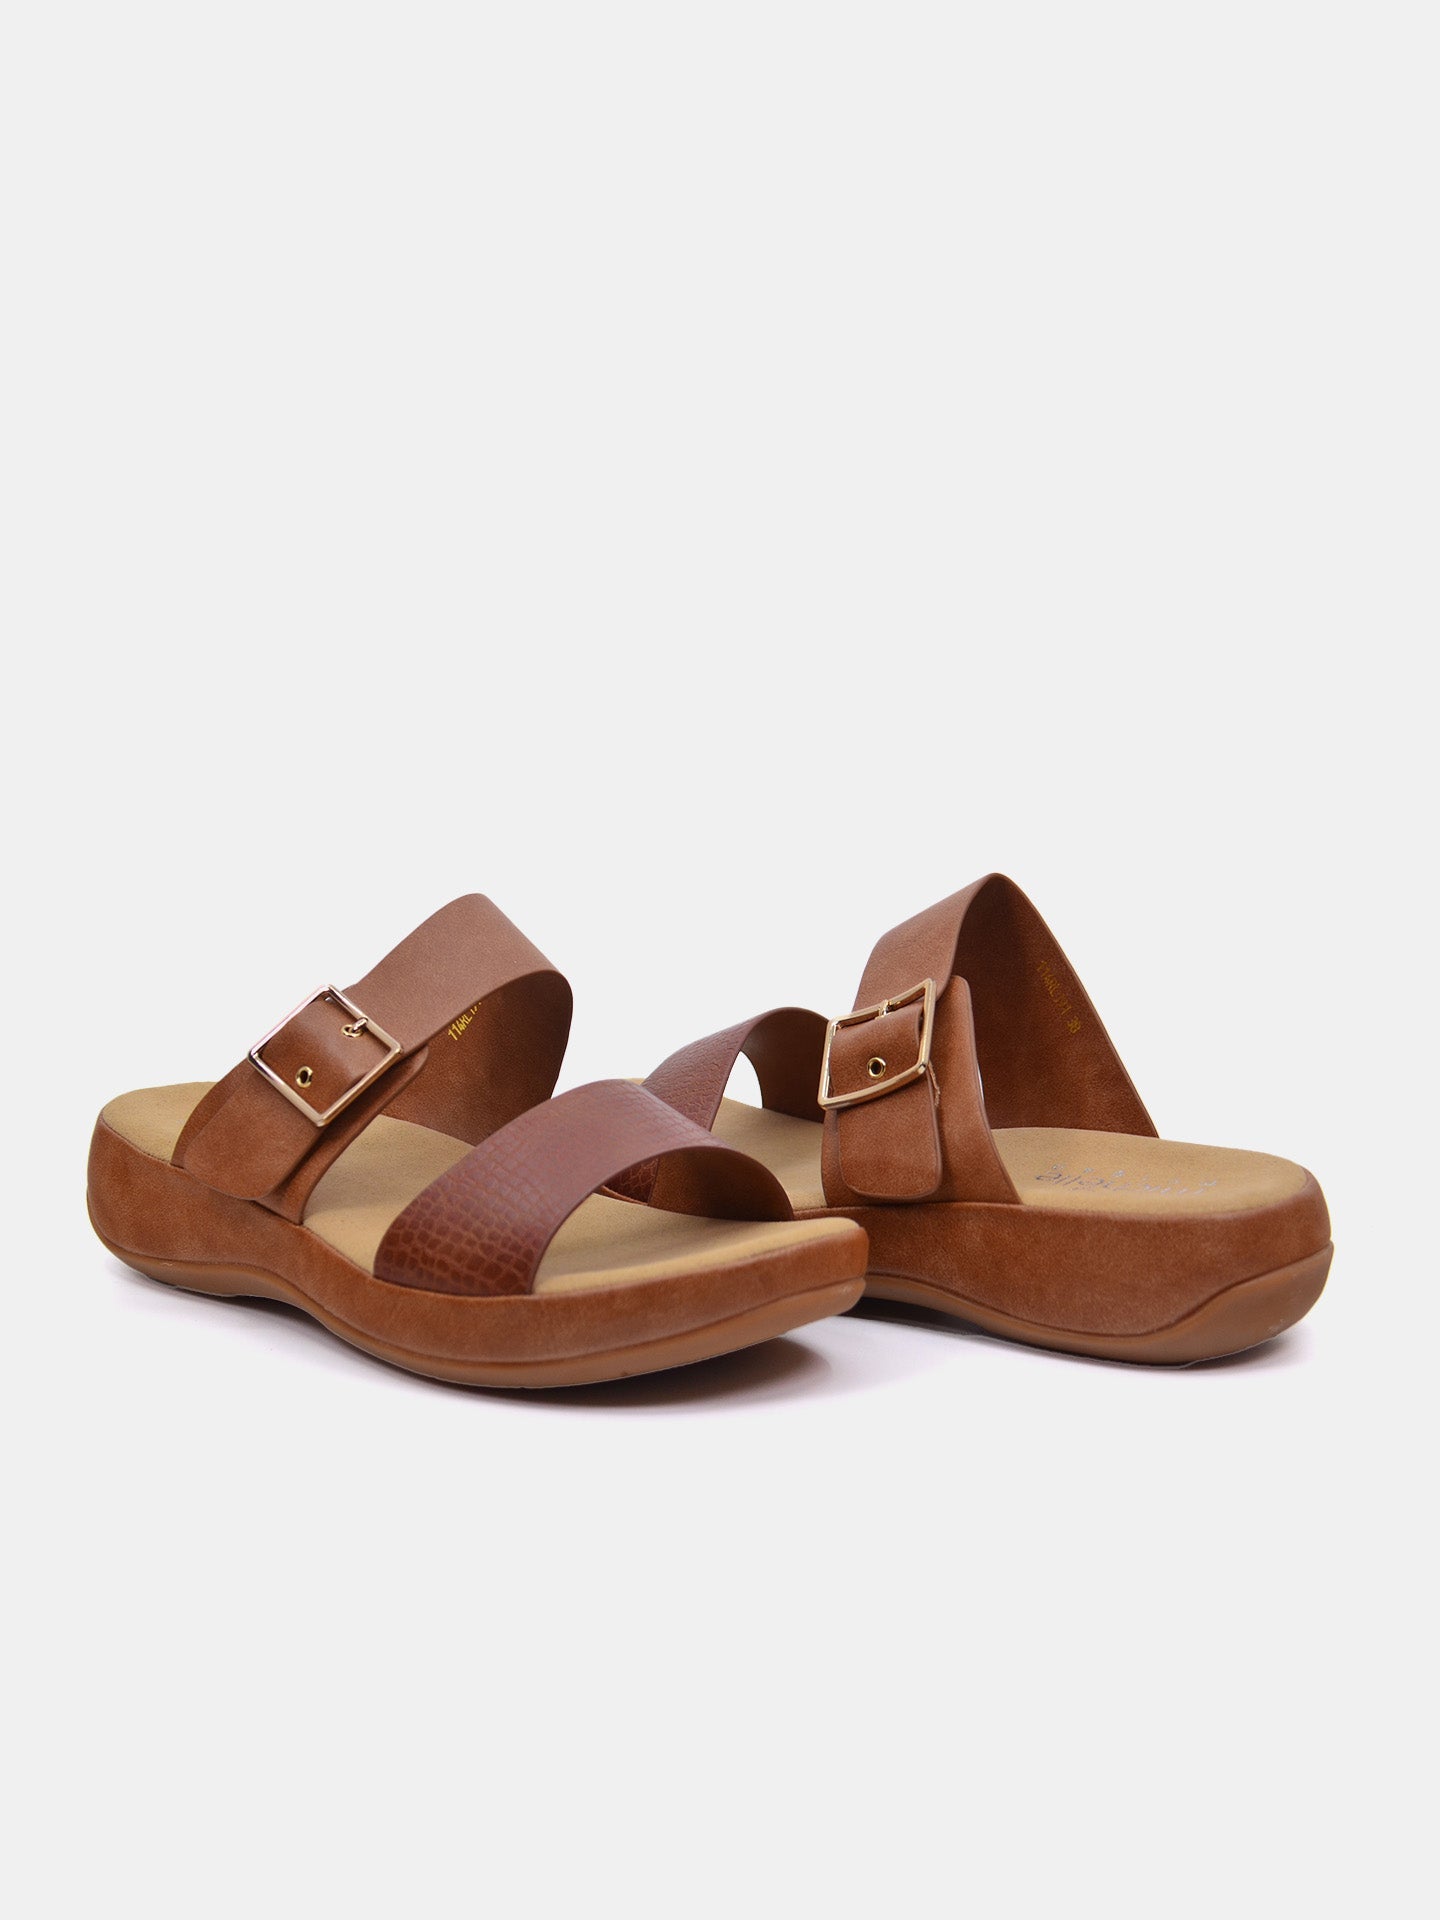 Michelle Morgan 114RL191 Women's Flat Sandals #color_Brown